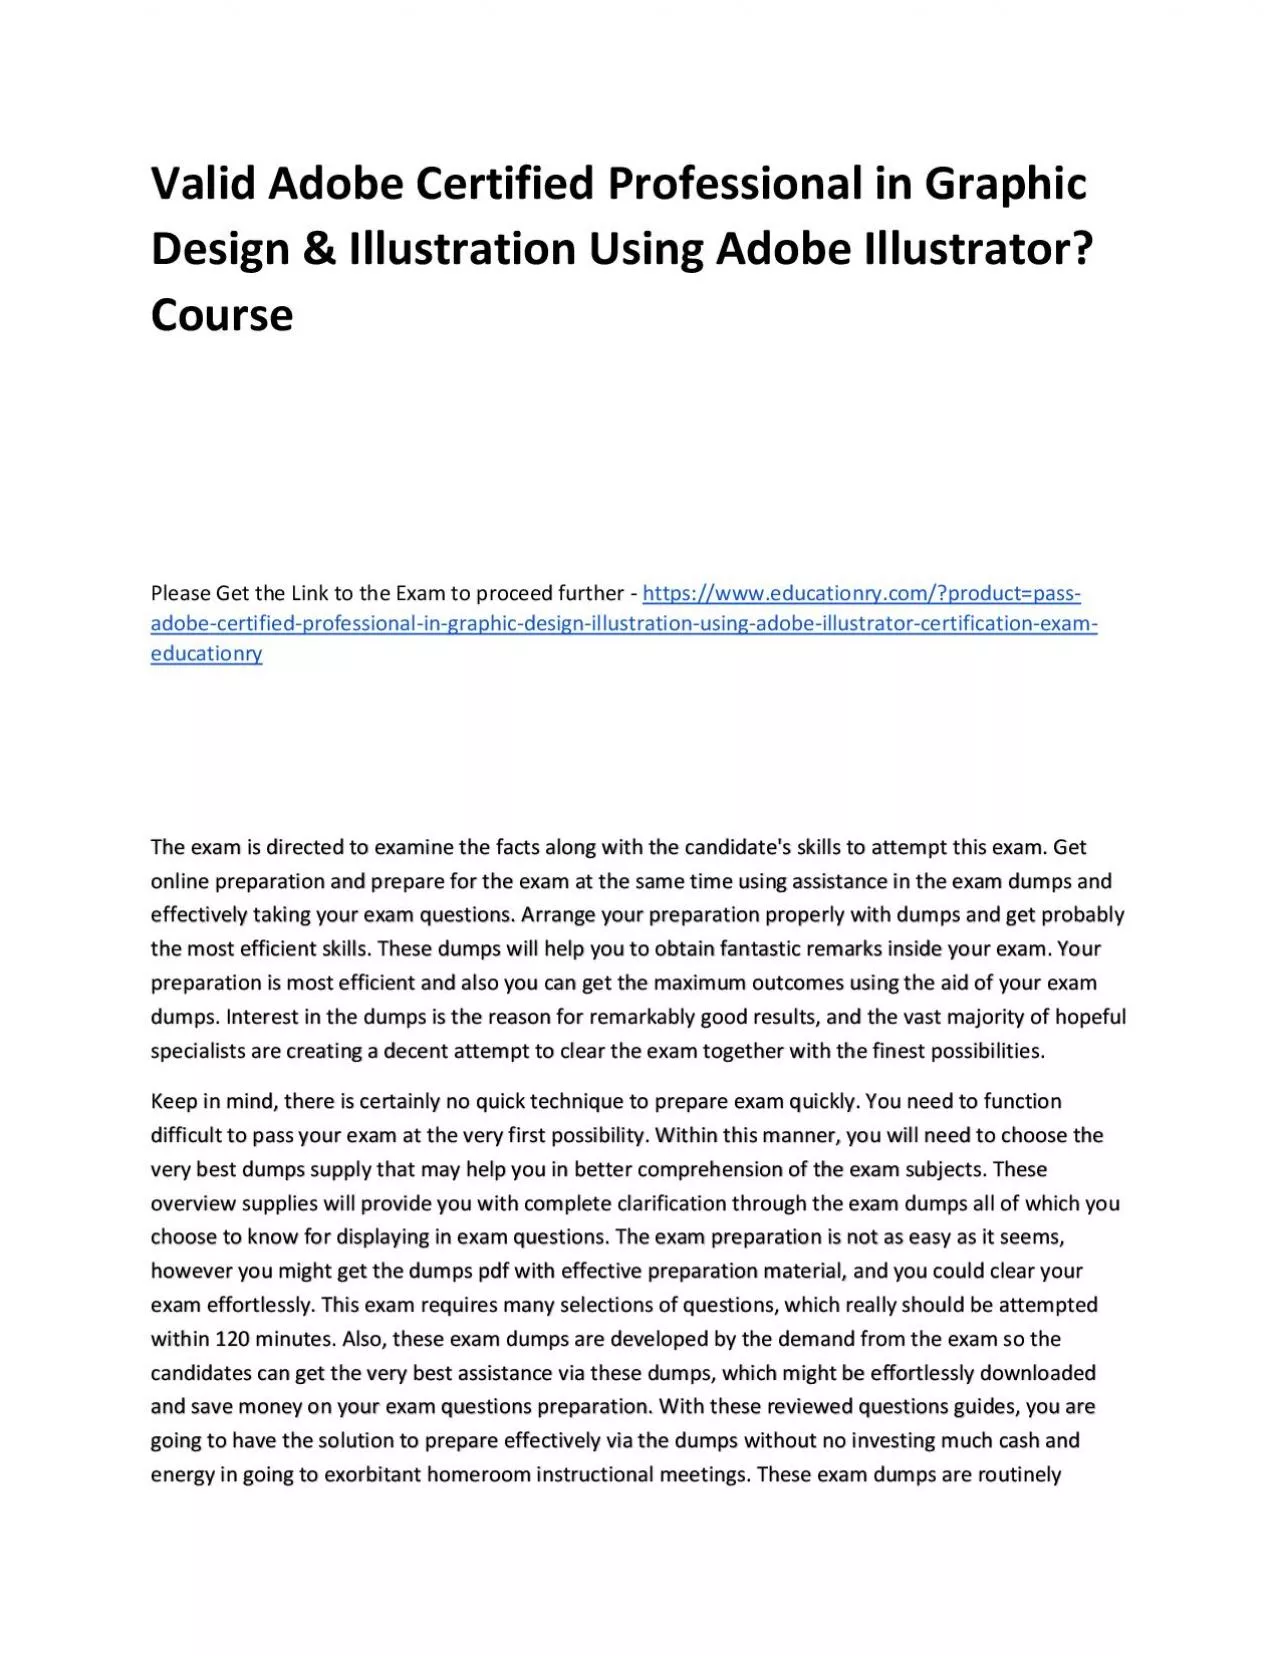 Valid Adobe Certified Professional in Graphic Design & Illustration Using Adobe Illustrator?